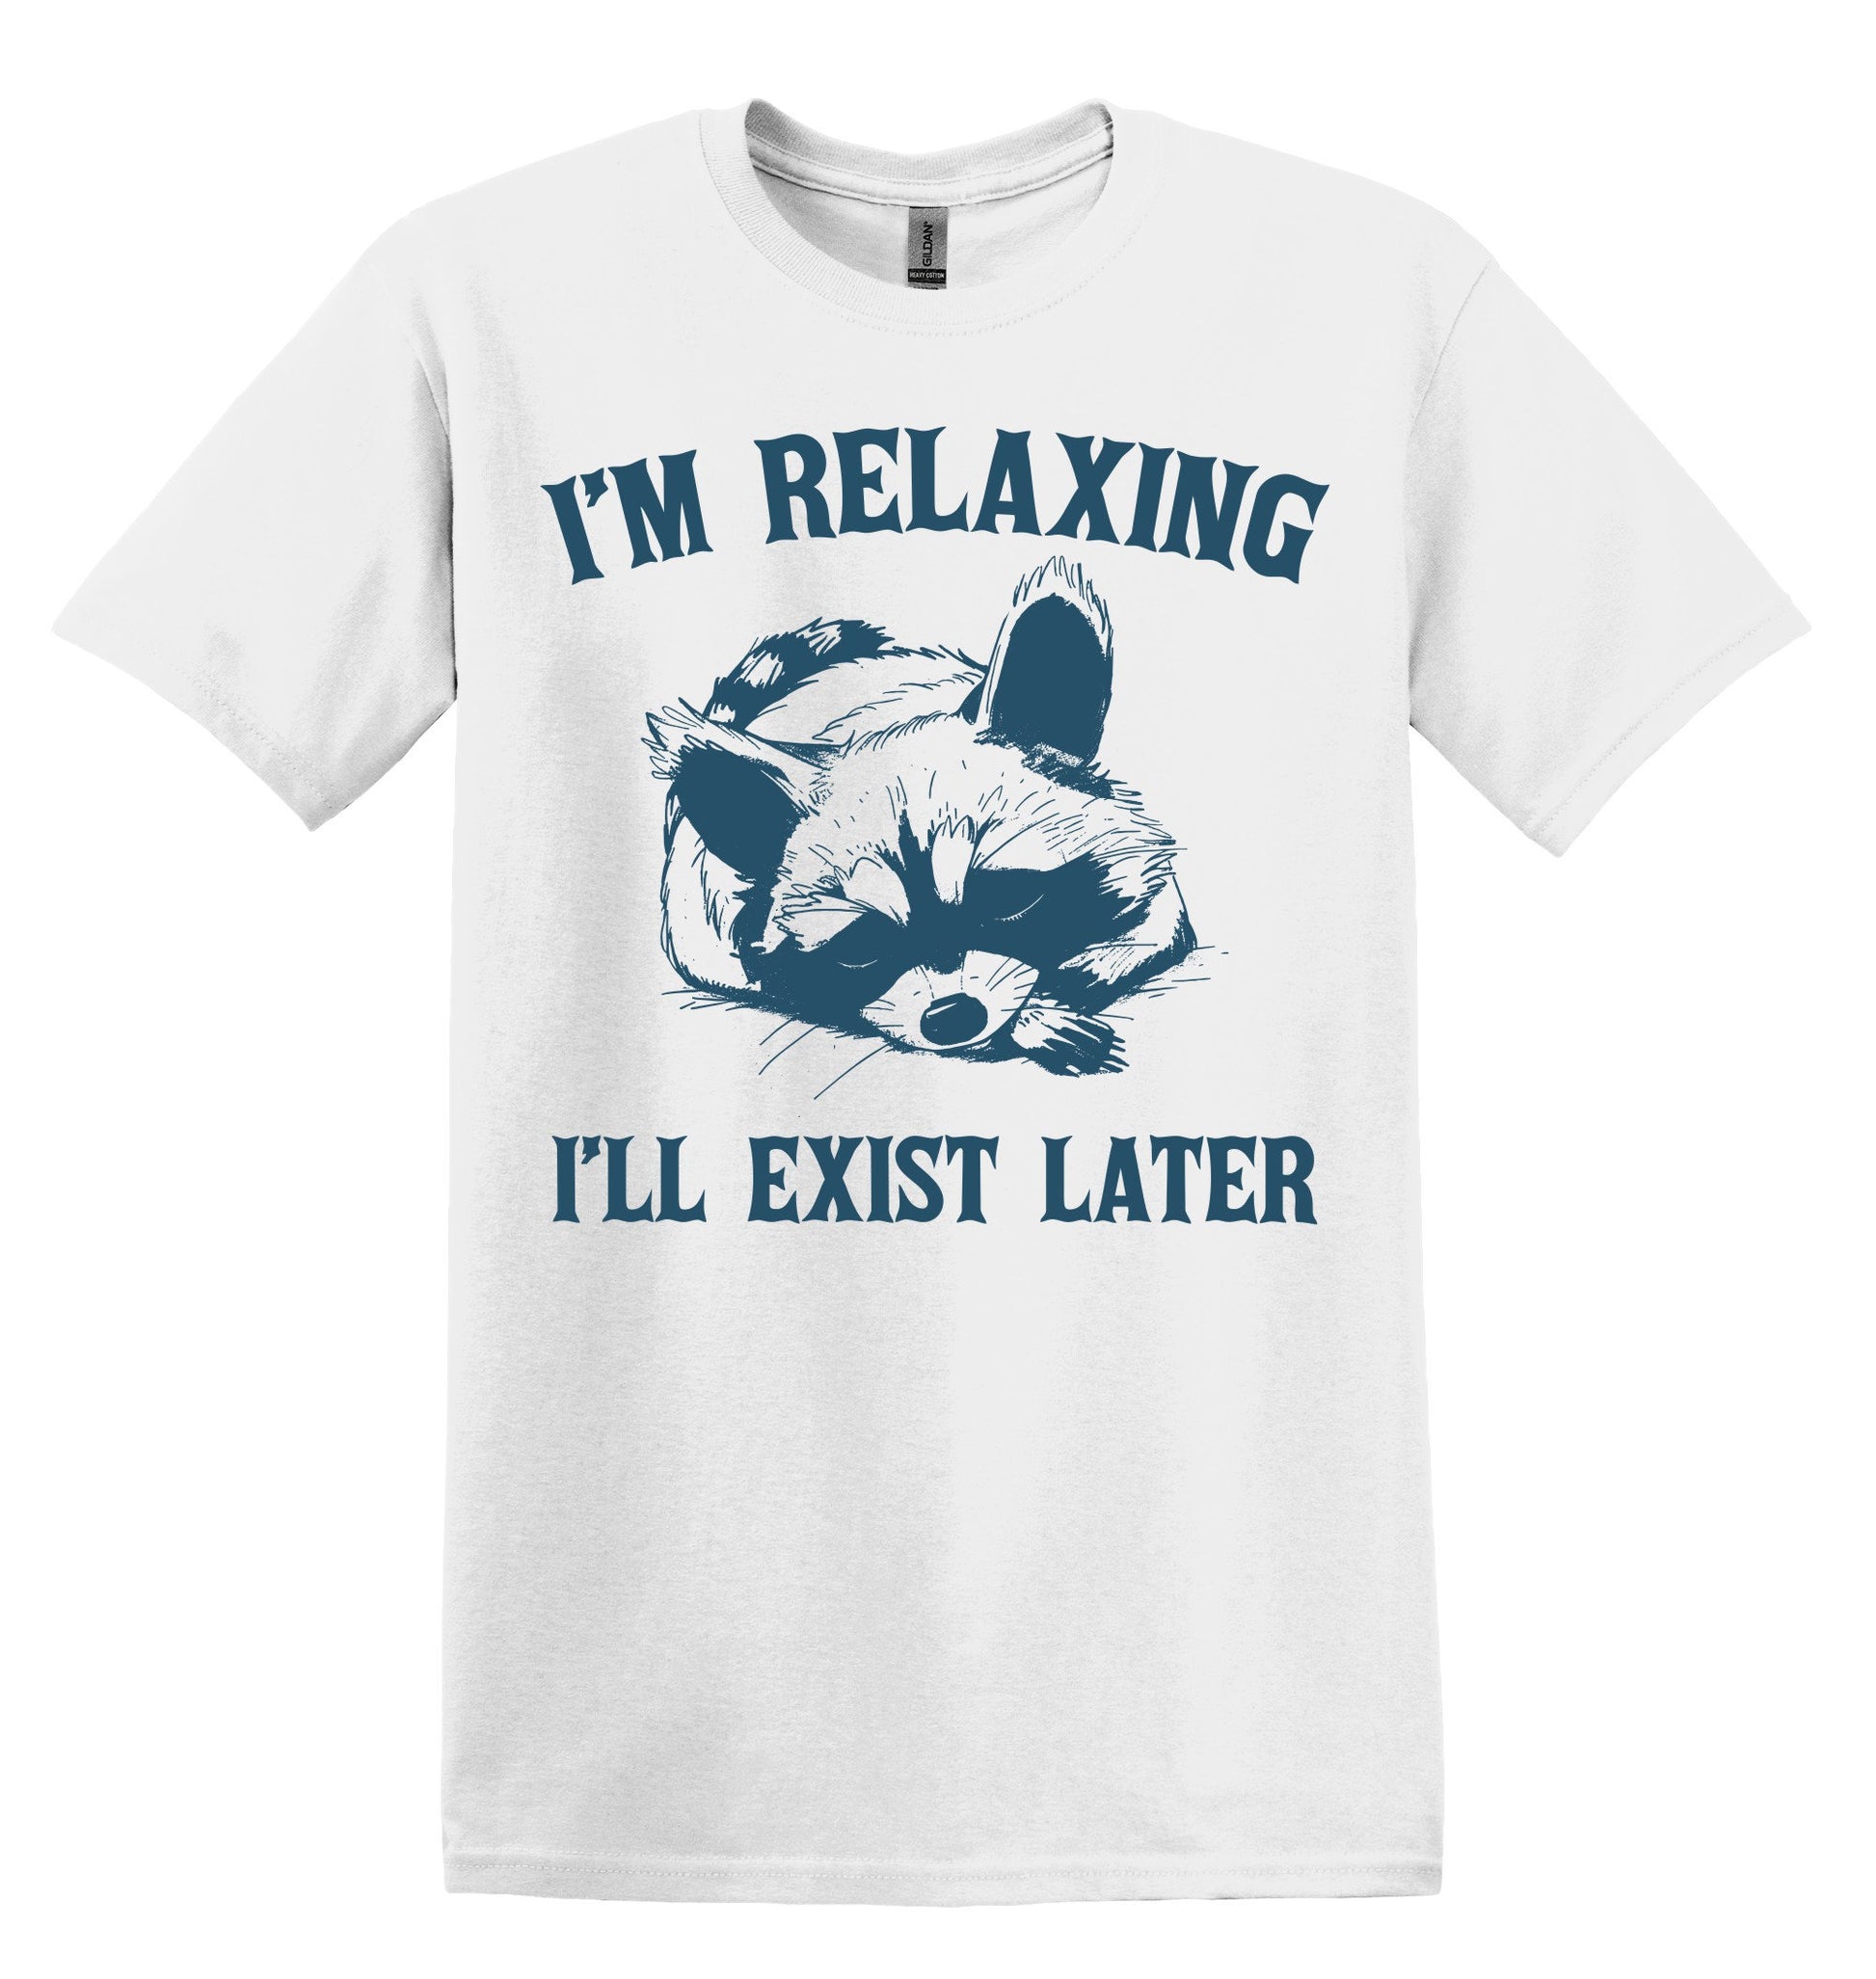 I'm Relaxing I'll Exist Later Raccoon Shirt Graphic Shirt Funny Vintage Adult Funny Shirt Nostalgia Shirt Cotton Shirt Minimalist Shirt